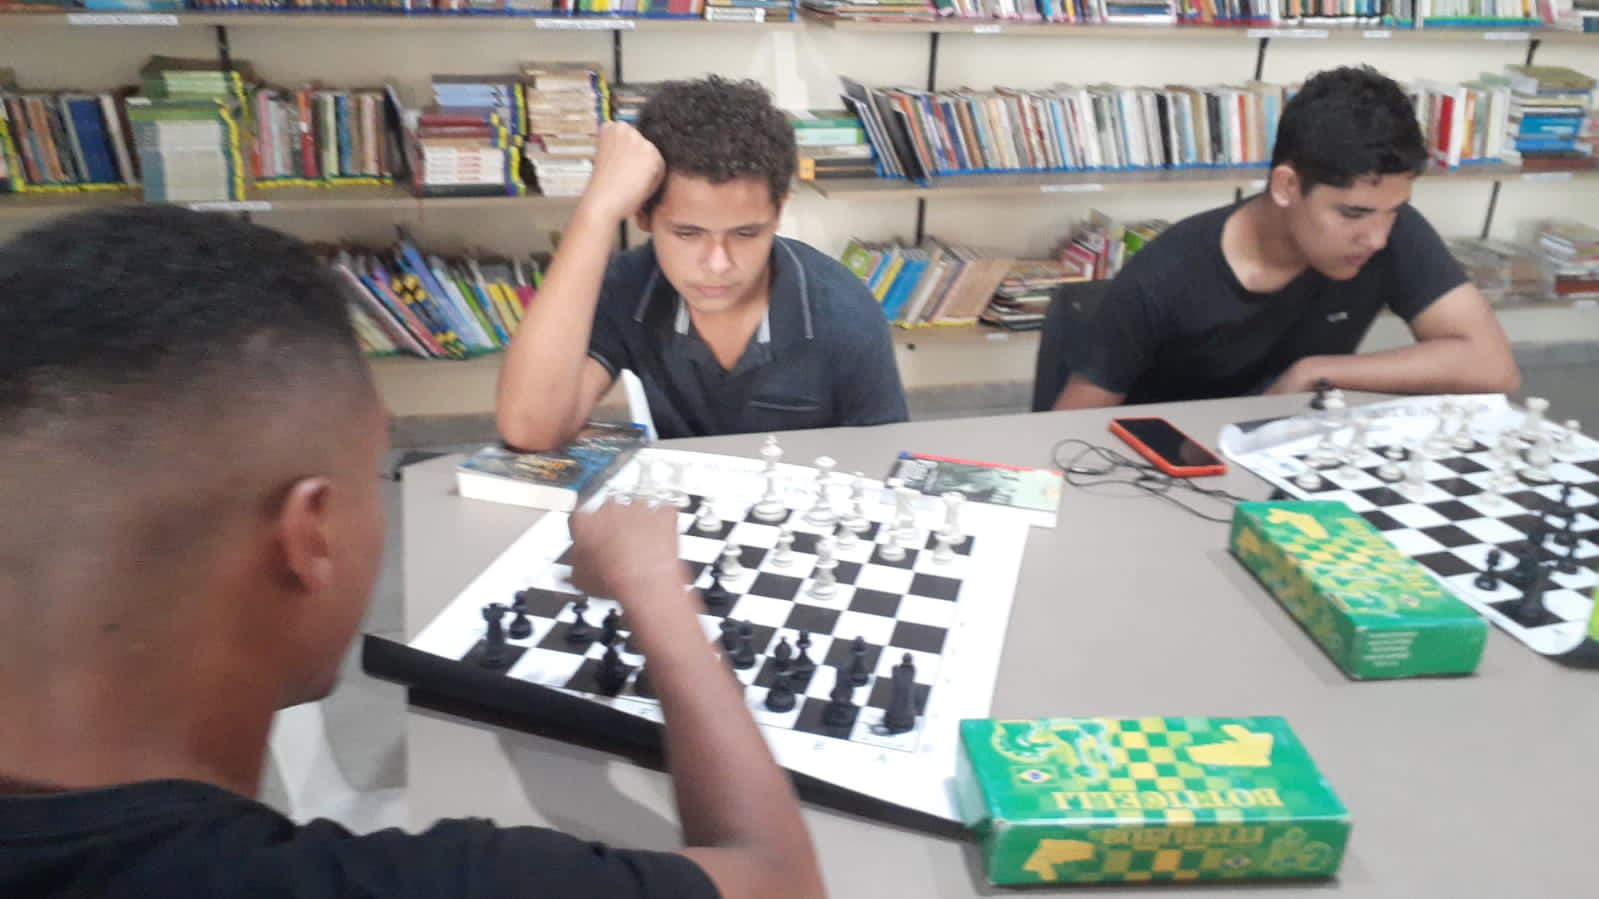 Município de Belém, PB, oferece curso gratuito de xadrez para